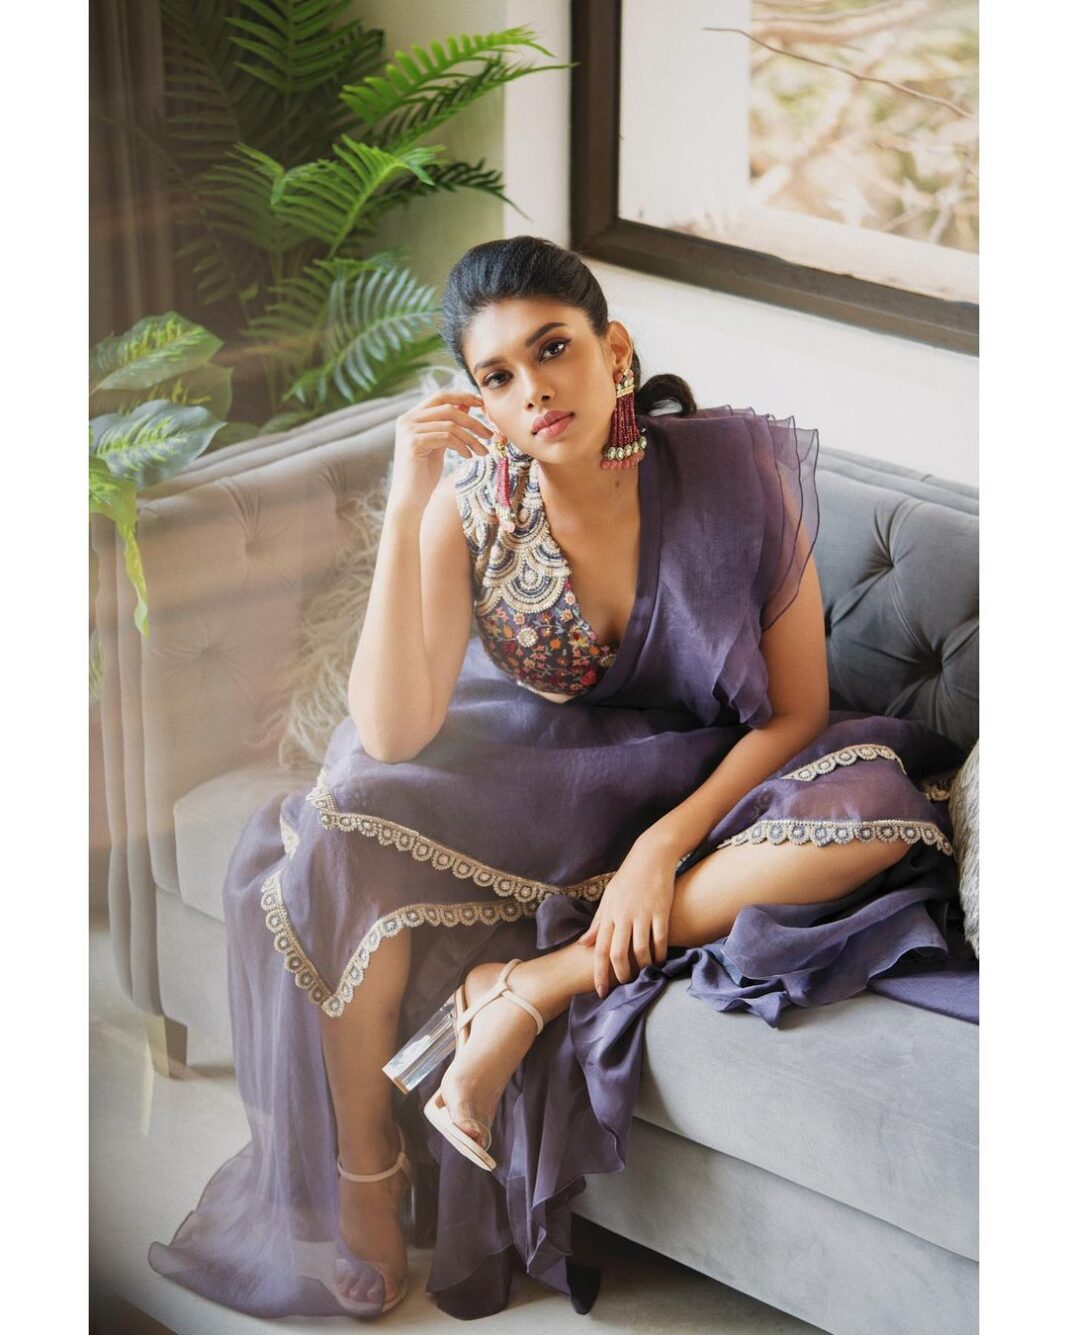 Dushara Vijayan Instagram - Shot by : @mobinkurien Assistance : @kishore_k2studios Styling : @stylemuze H&M : @phiphi_shimray #actor #actress #model #indianmodel #indianactor #indianactress #fashion #design #photoshoot #indian #southindian #stylist #makeup #artist #fashionmodel #style #modeling Chennai, India